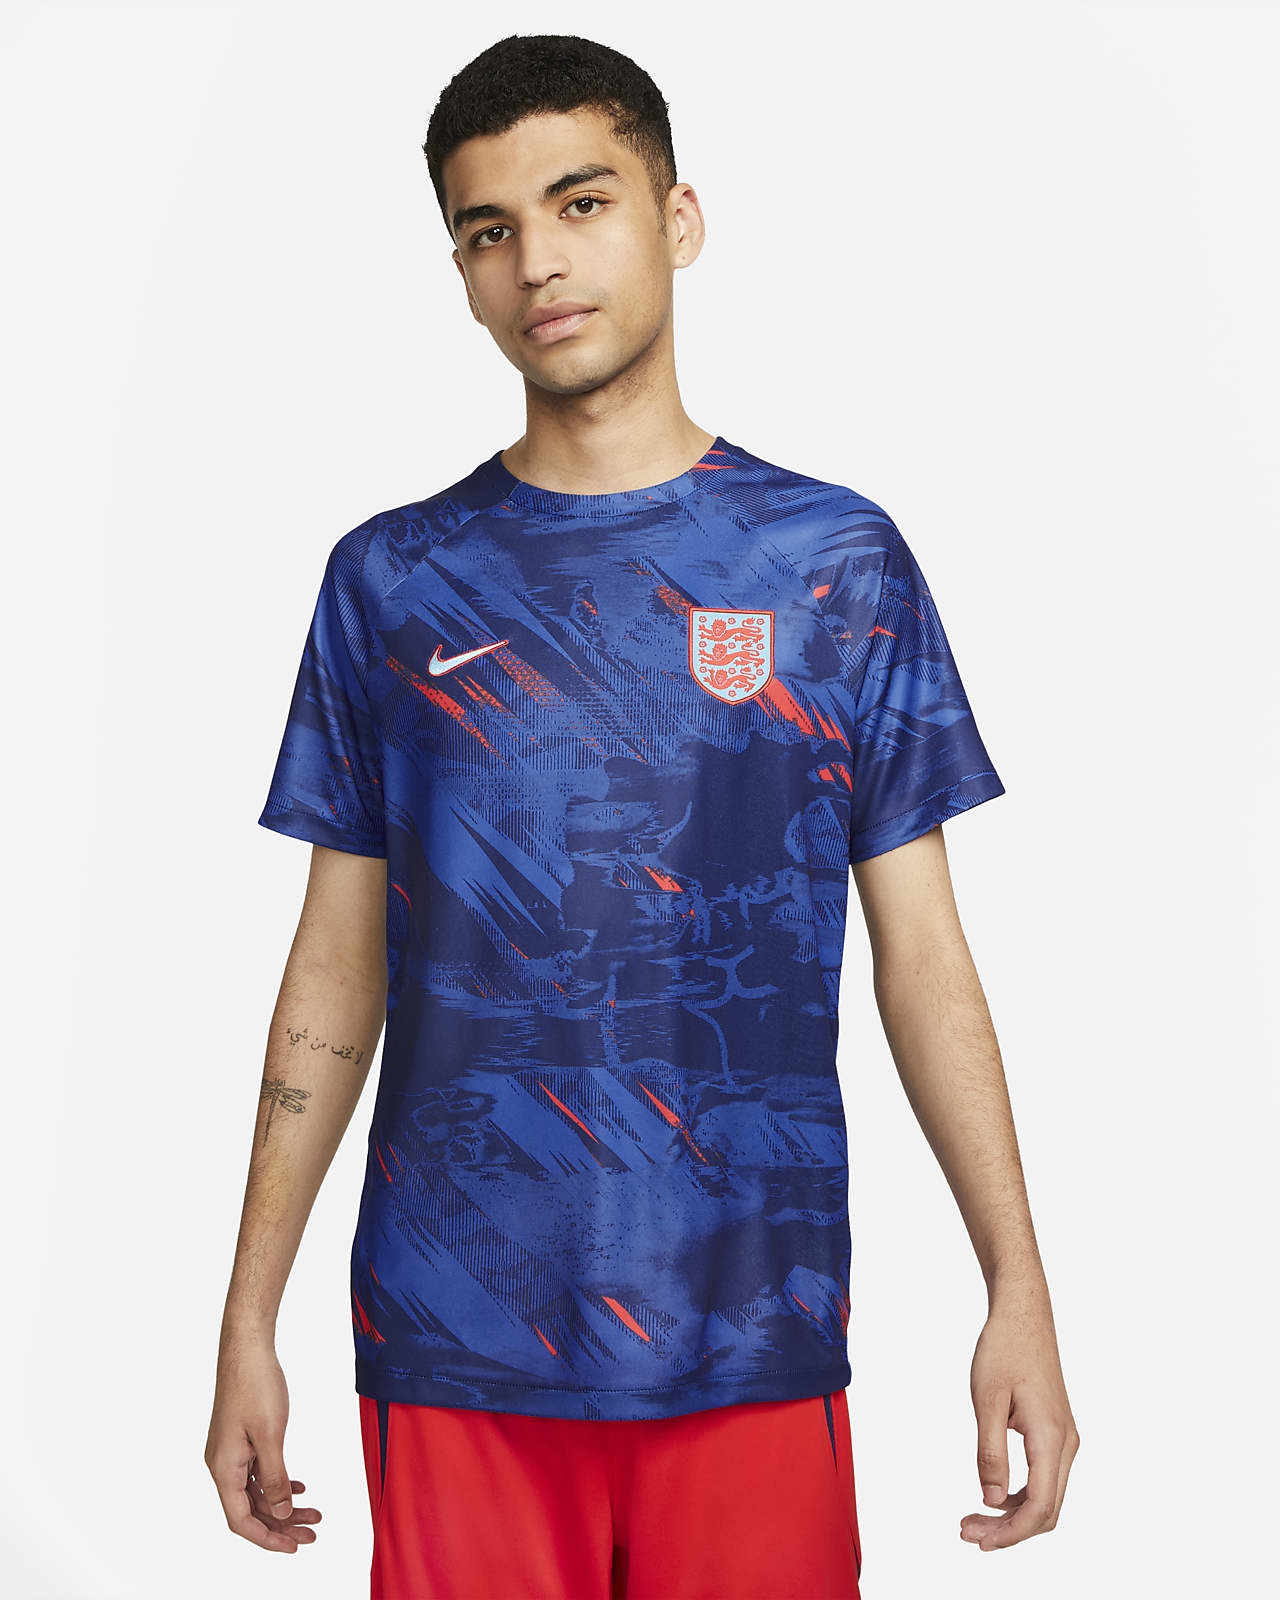 Inglaterra Camiseta fútbol antes del partido Nike - Hombre. Nike ES